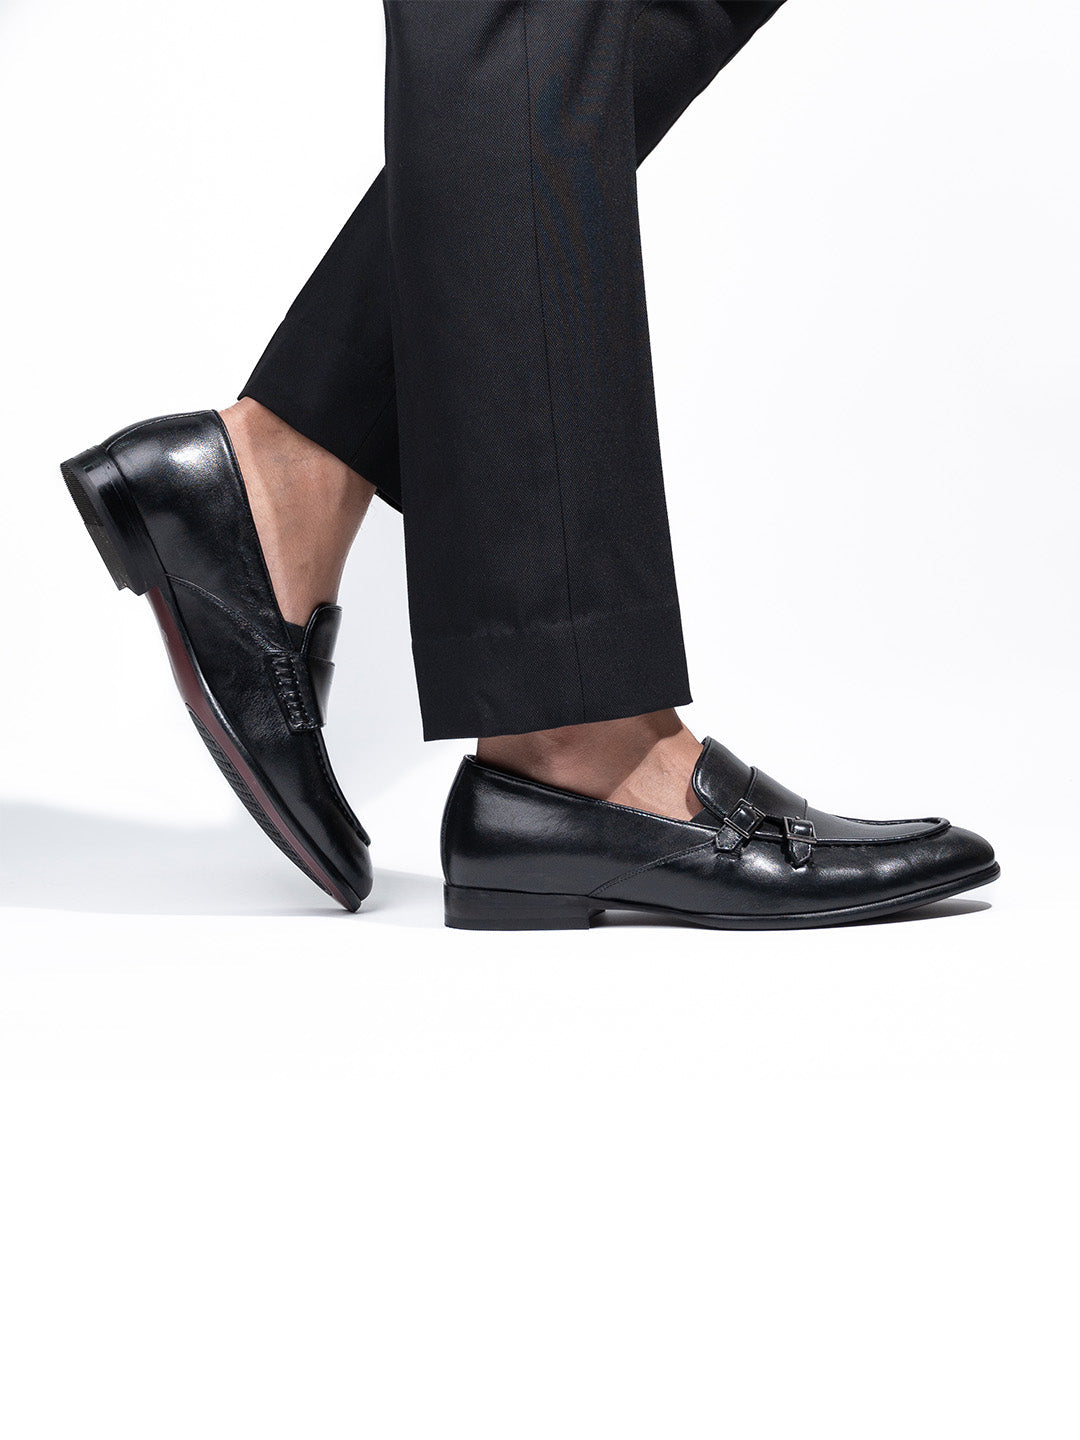 Black Leather Monk Slip-on Shoes